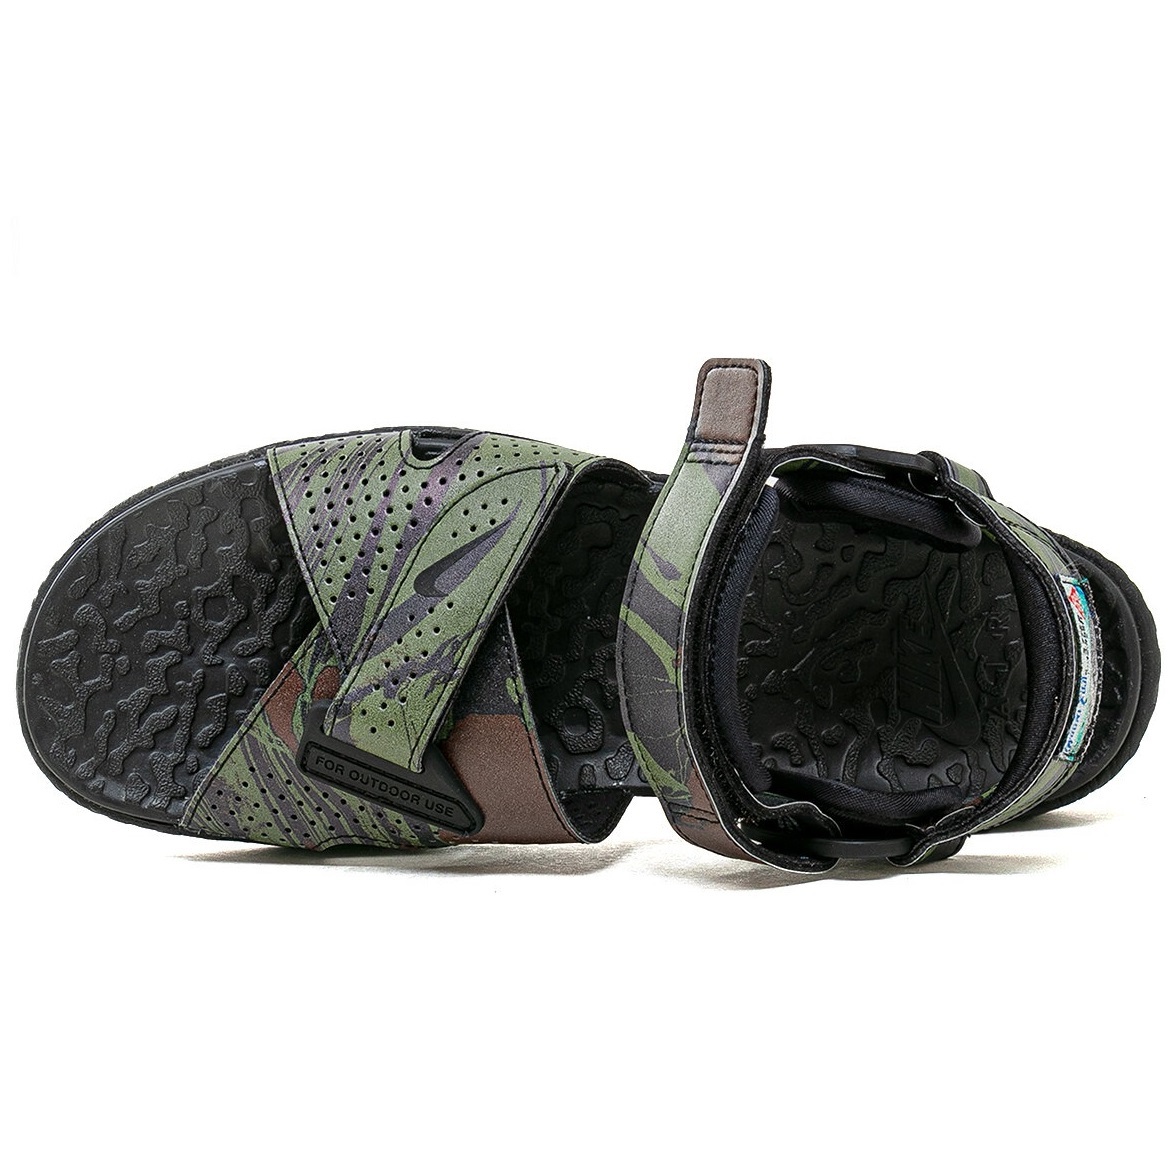 # Nike e-si-ji- сандалии воздушный te колодка tsu камуфляж новый товар 23.0cm US4 NIKE ACG AIR DESCHUTZ Mt.Fuji CAMO камуфляж 